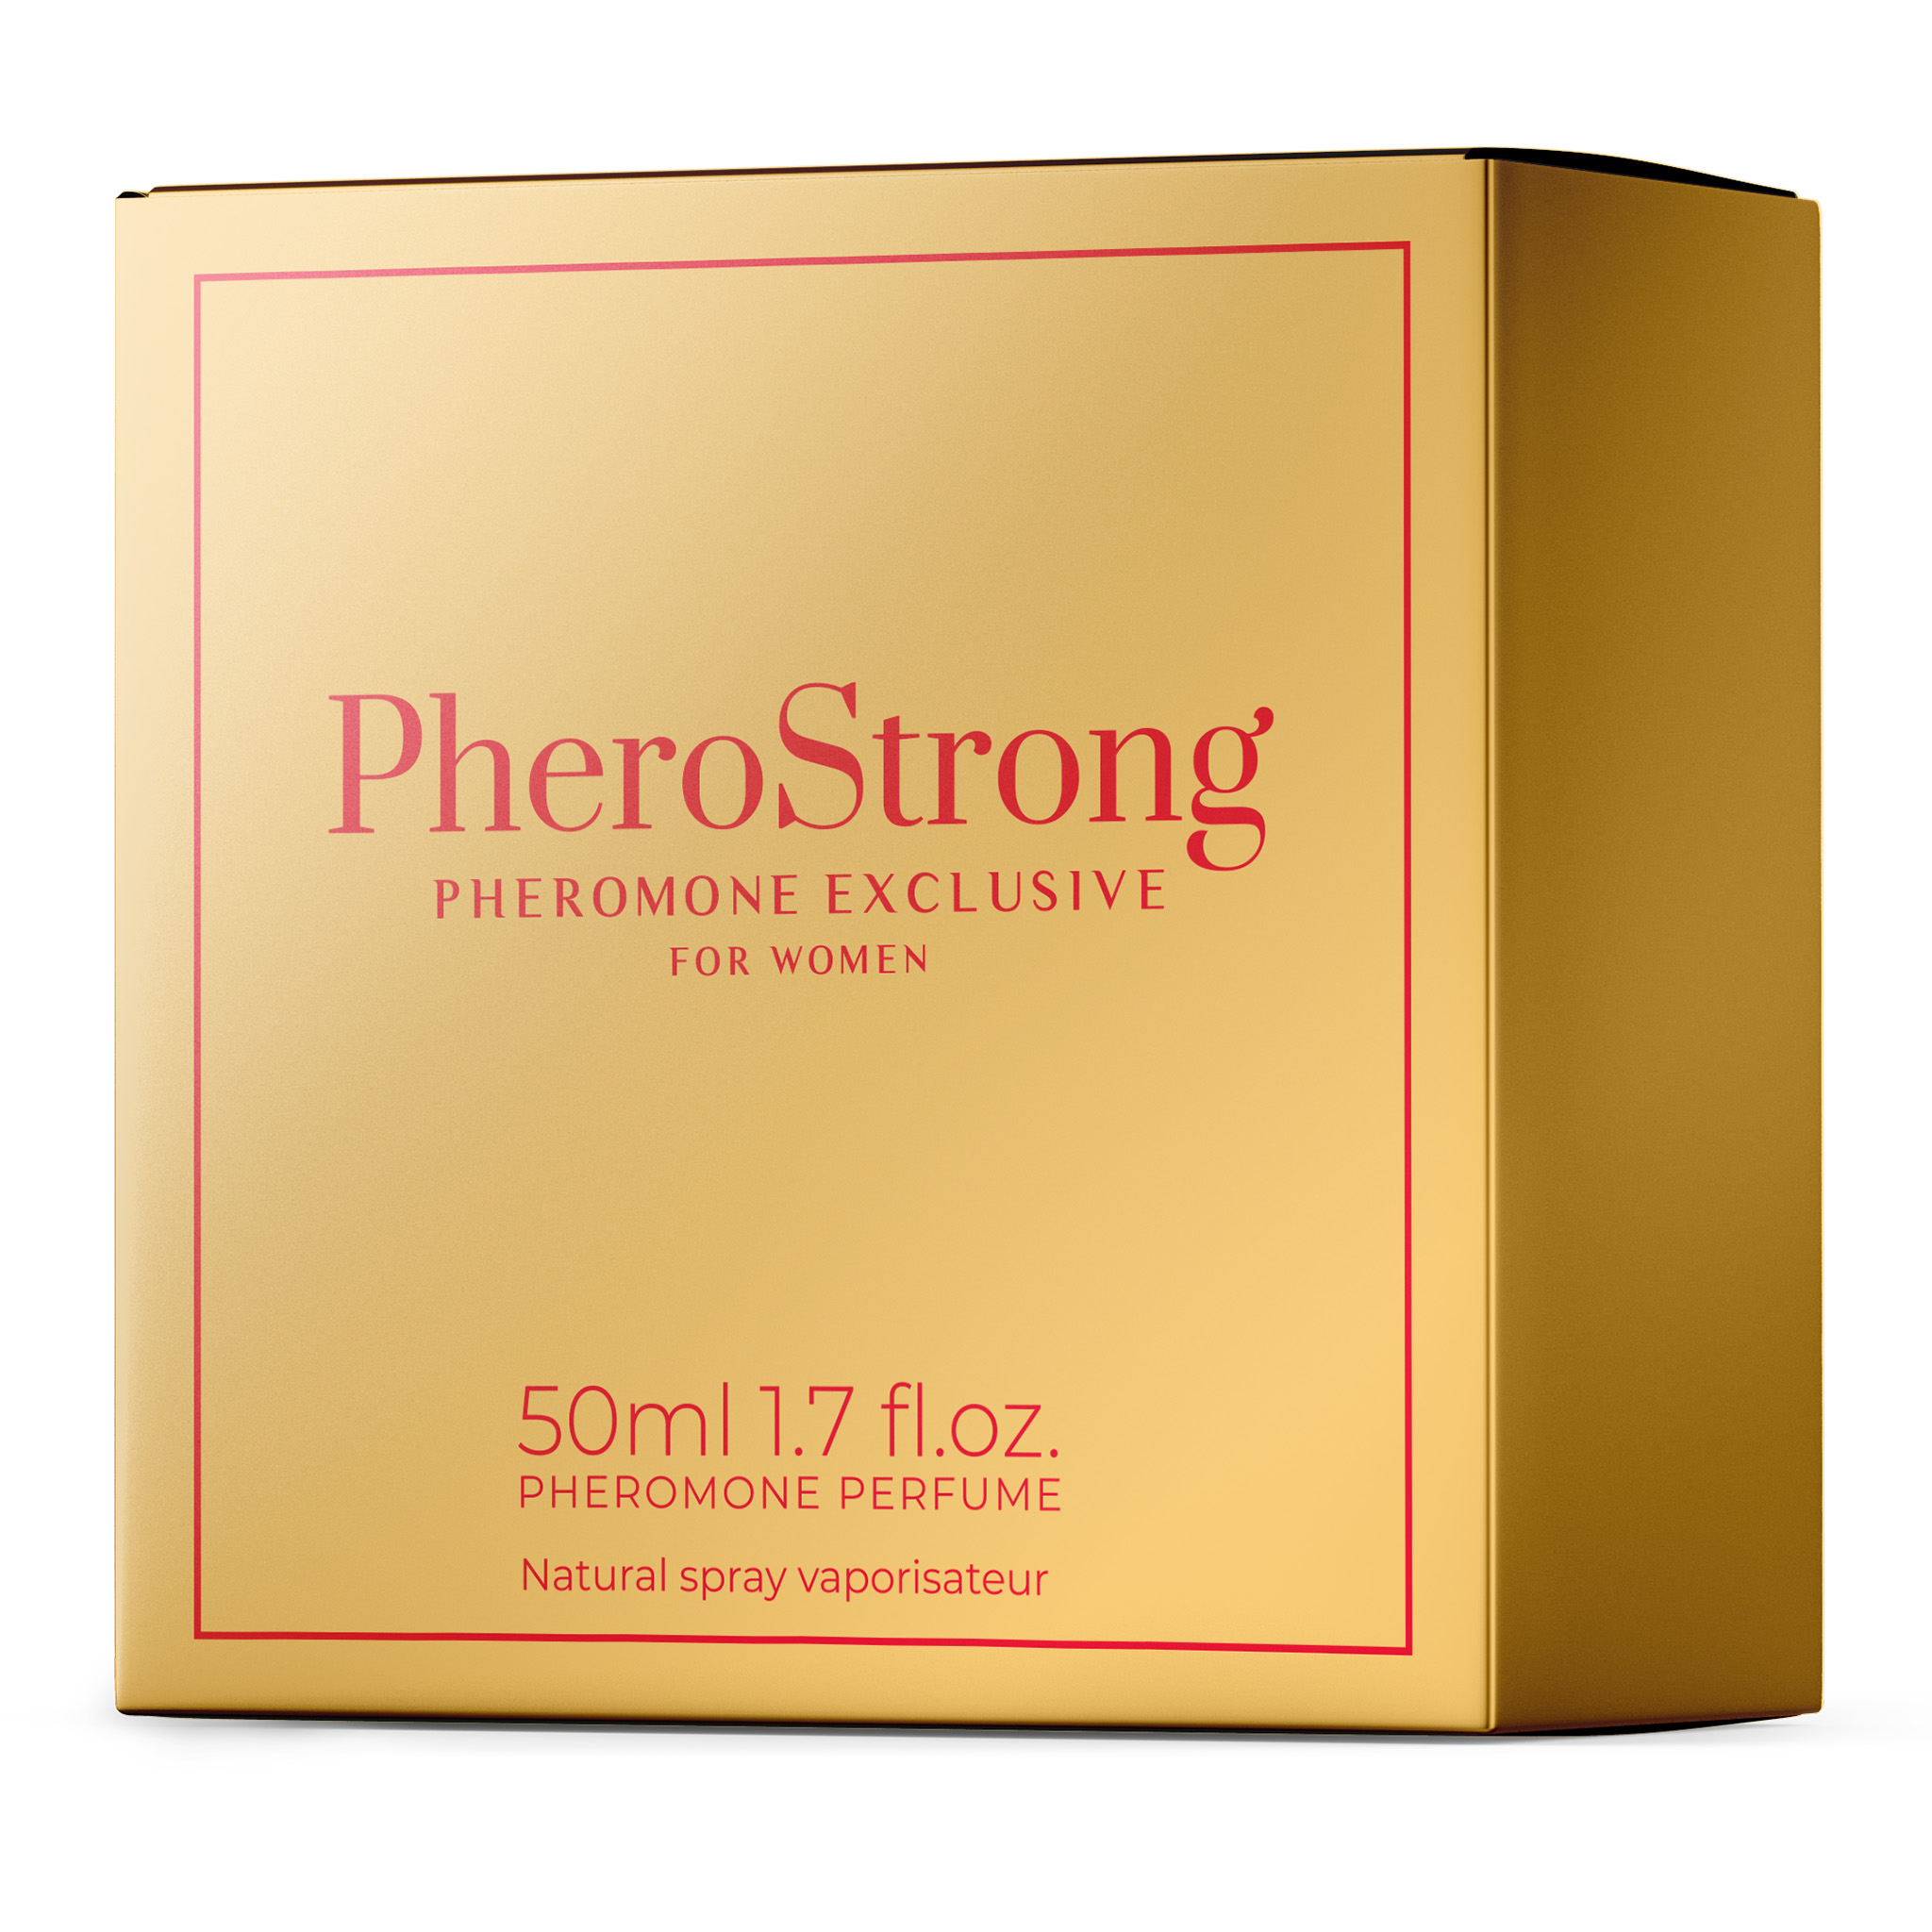 PheroStrong Pheromone Parfum Exclusive for Women 50ml